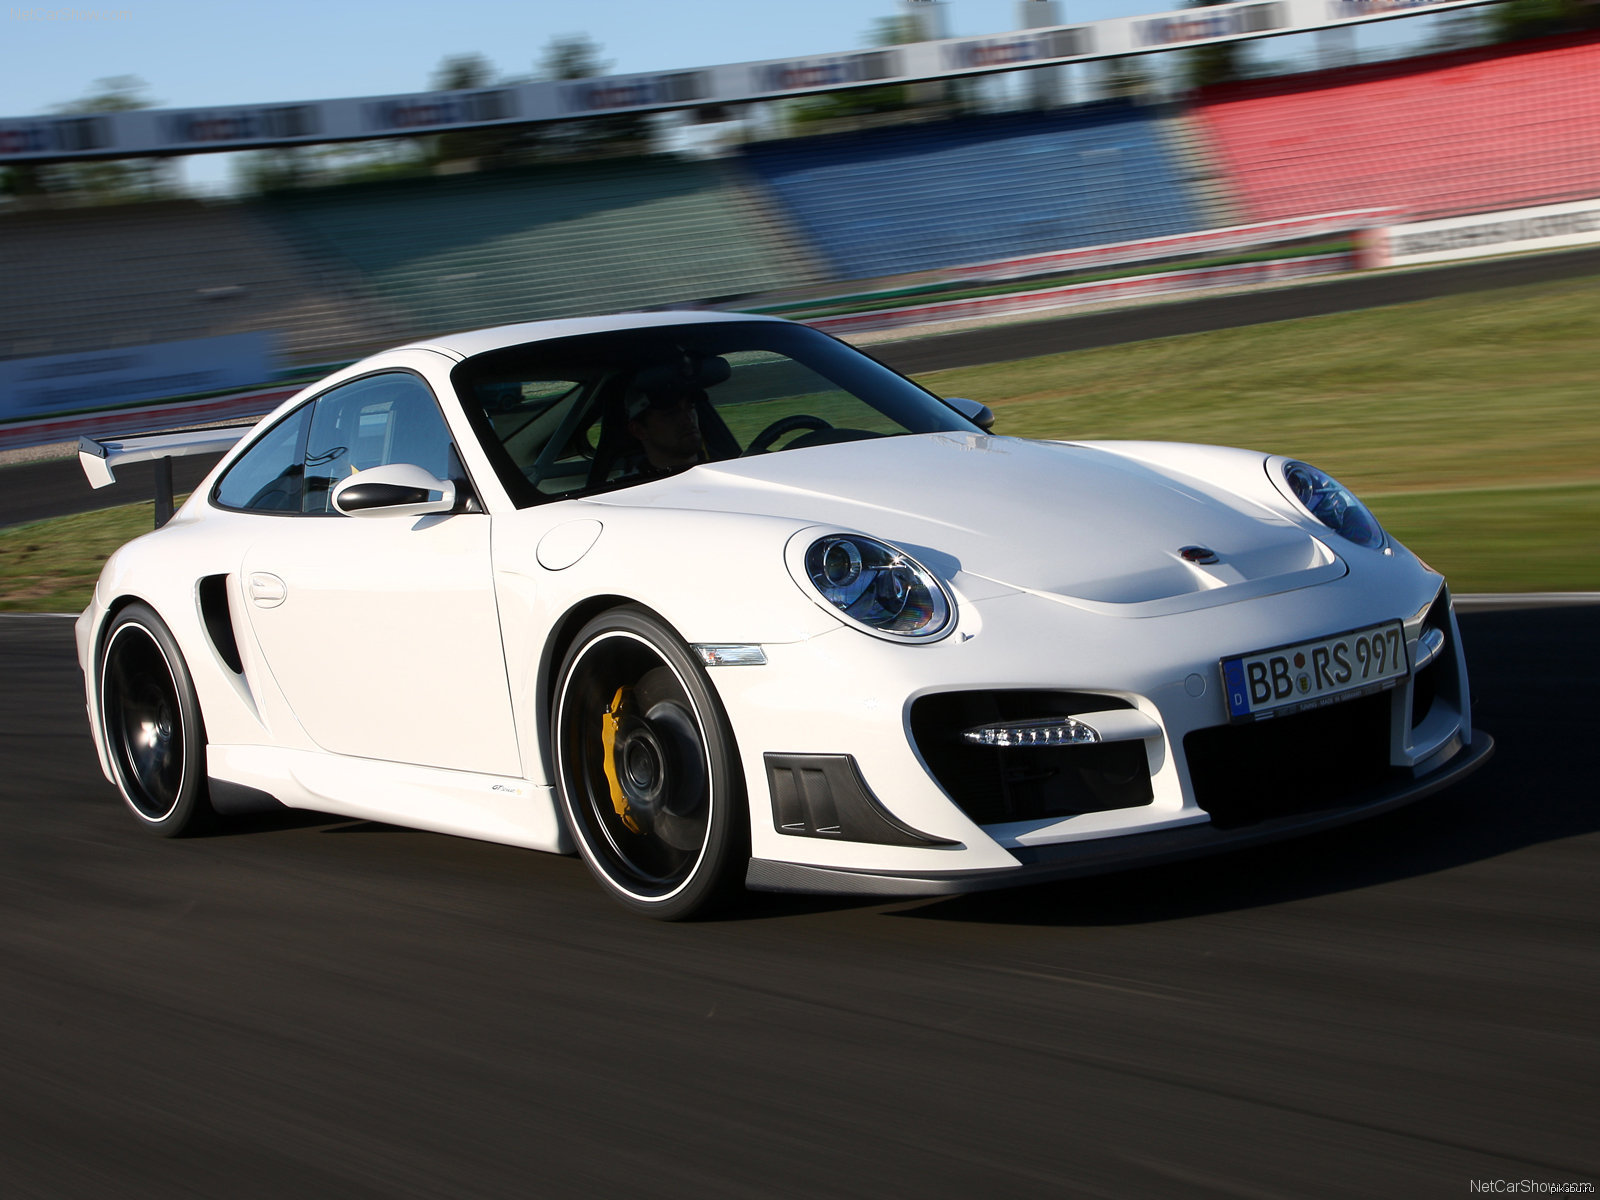 Порше спорткар. Porsche 911 gt Street RS. Porsche 911 gt2 2008. 911 Порш спортивный Порше. Porsche 911 gt2 RS 2008.